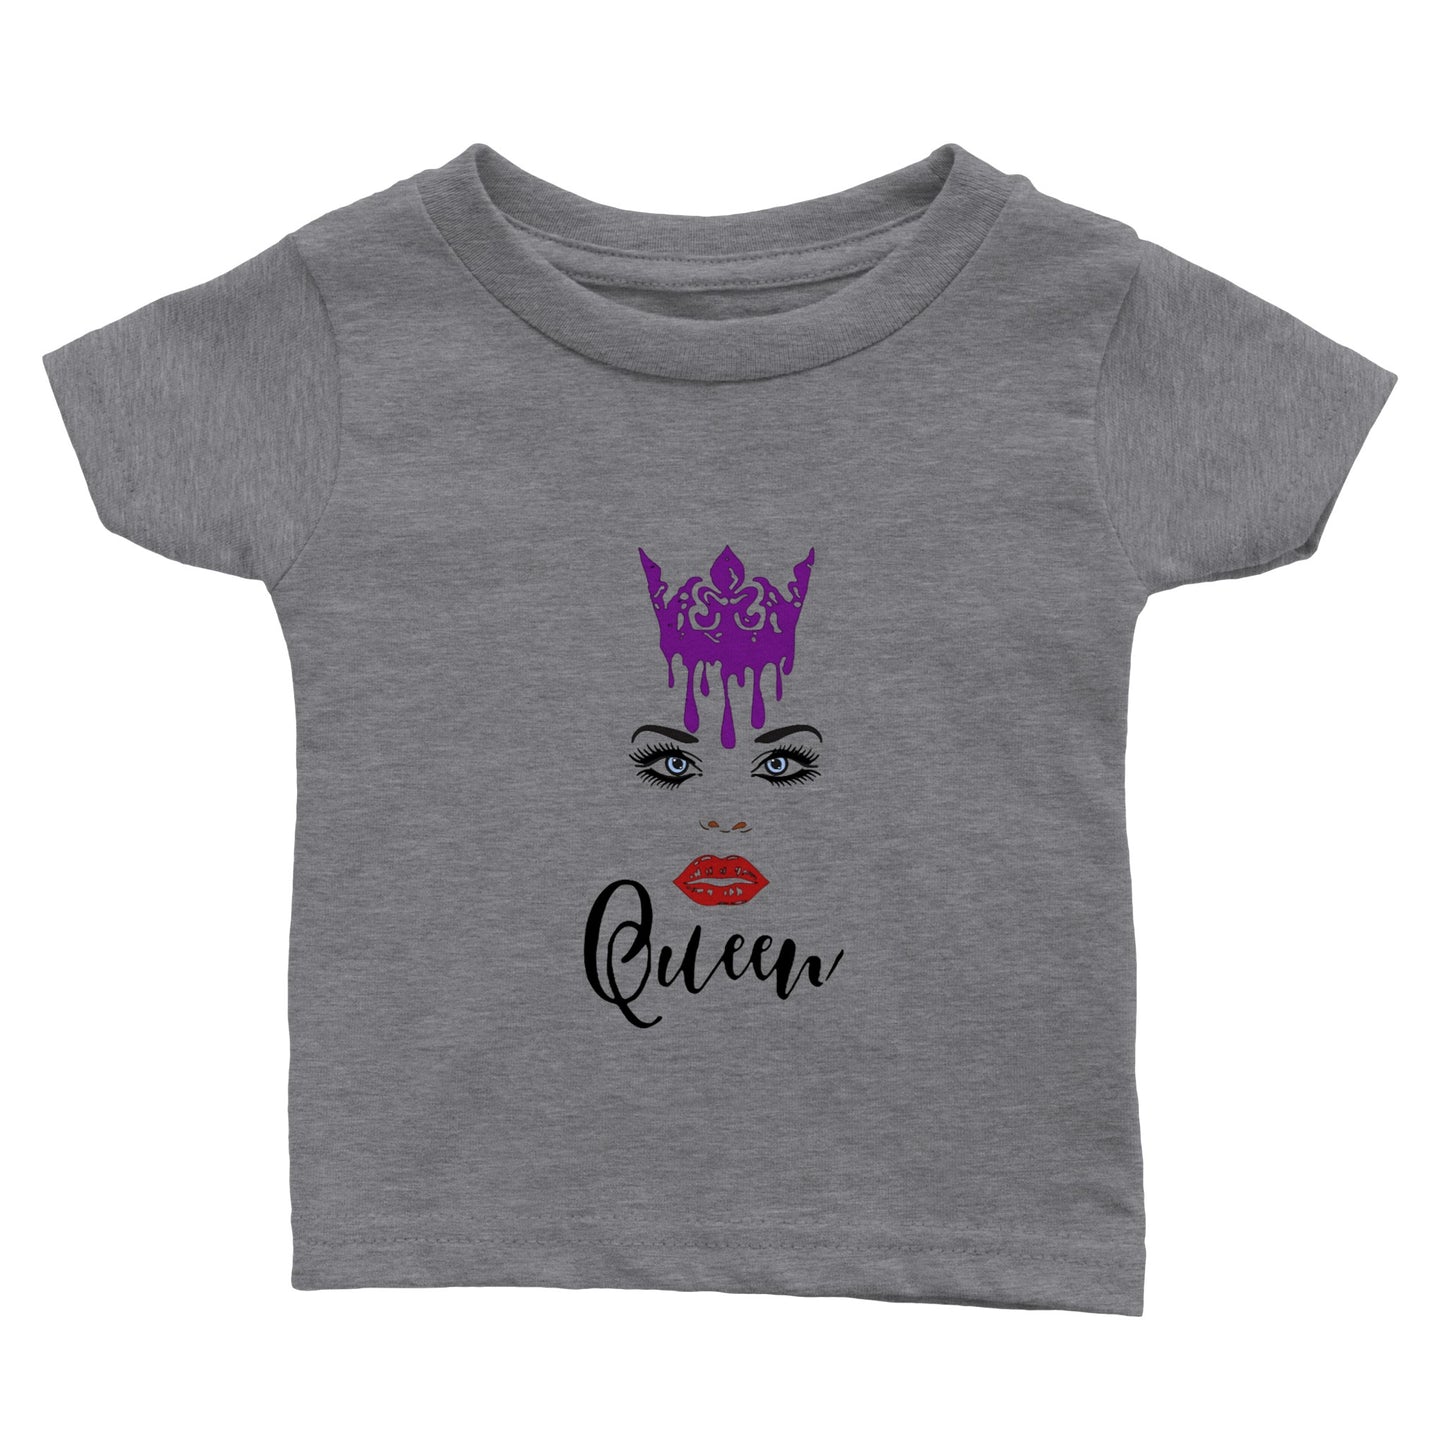 Crown Queen- Classic Baby Crewneck T-shirt